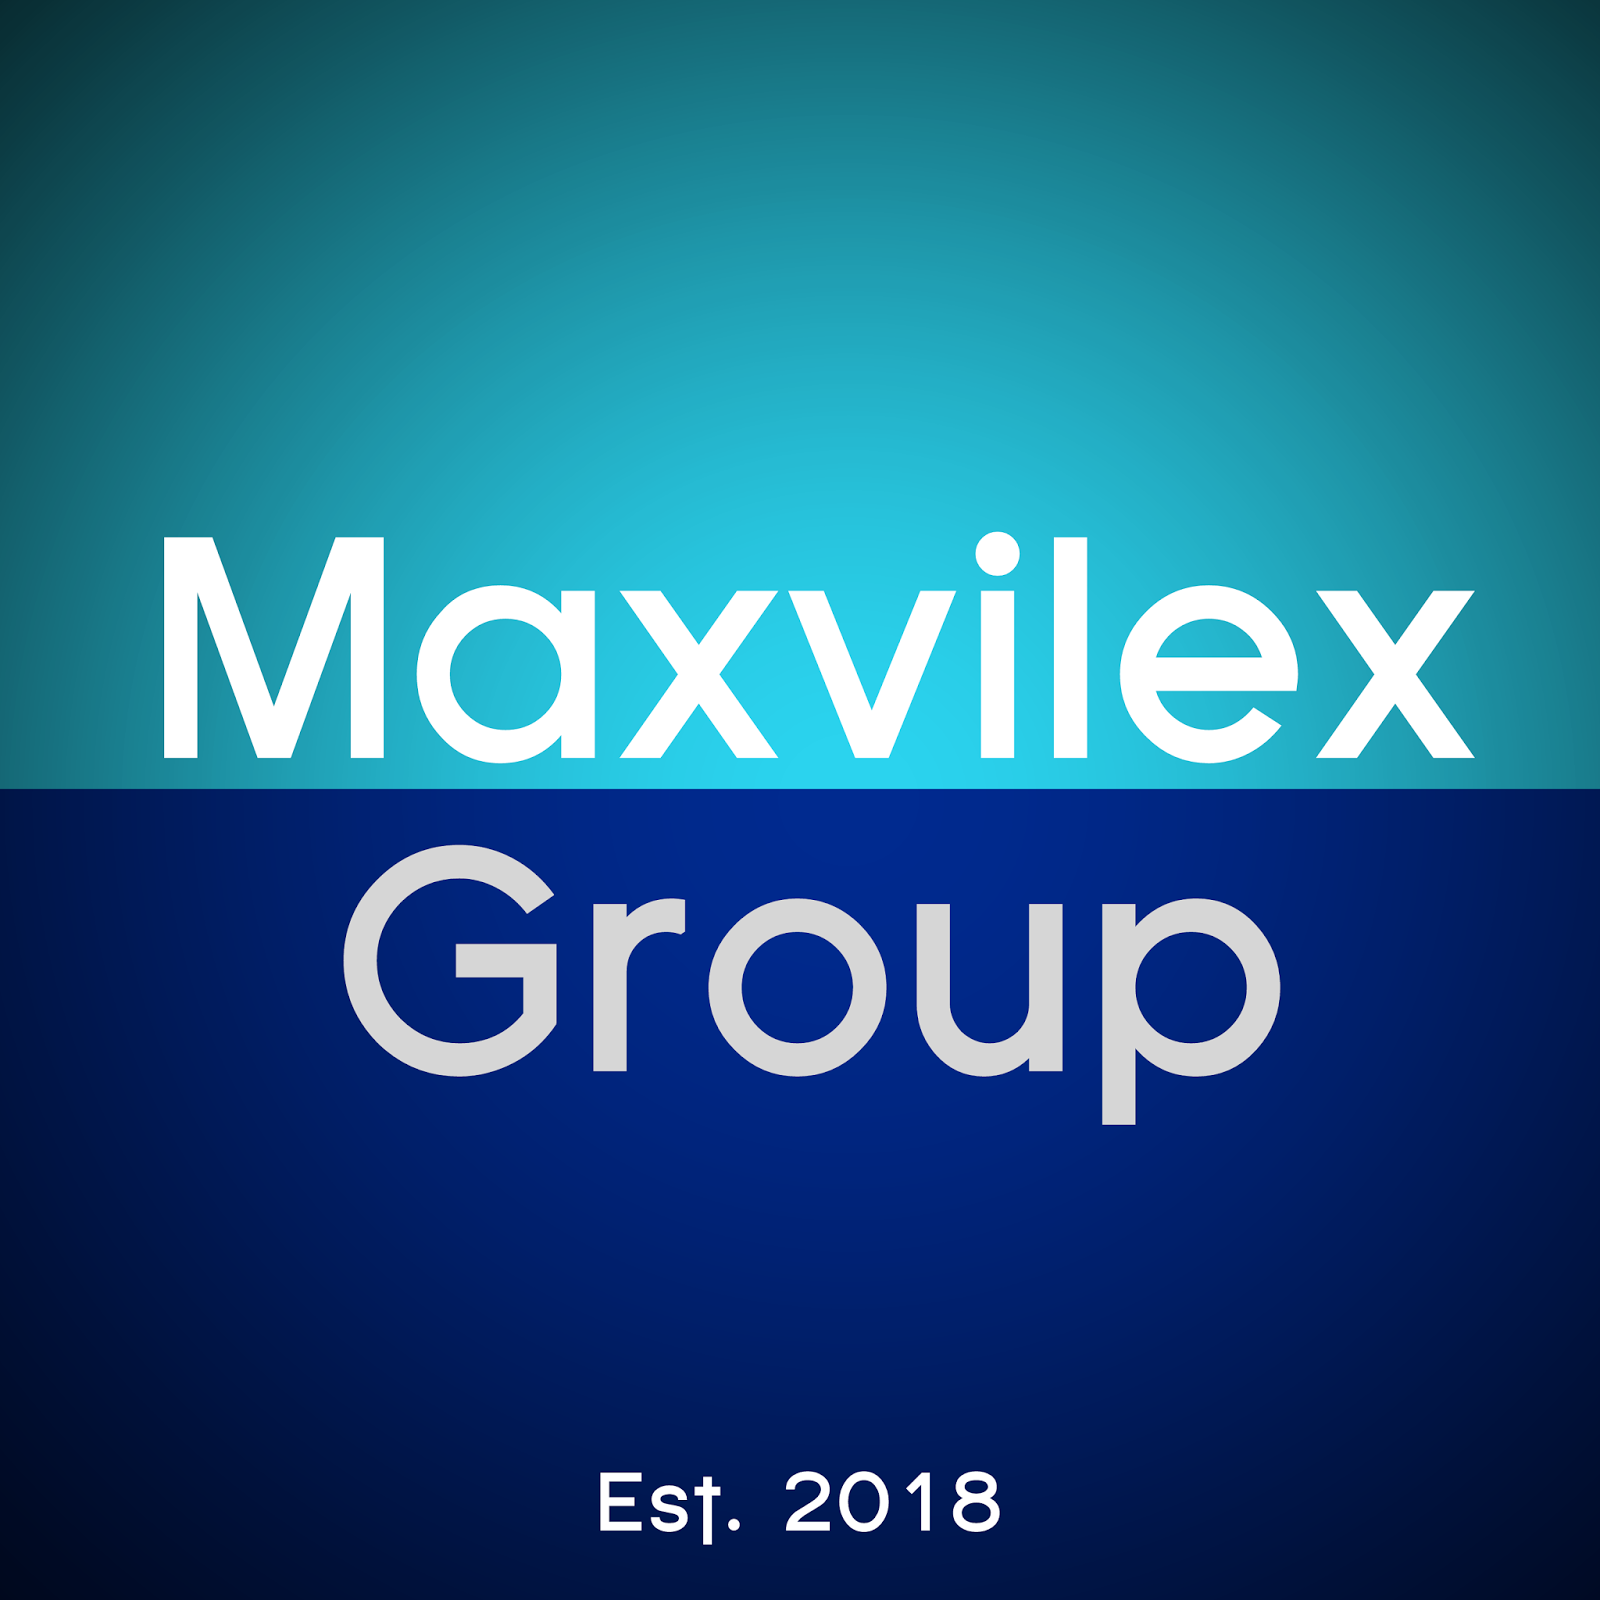 Maxvilex Group